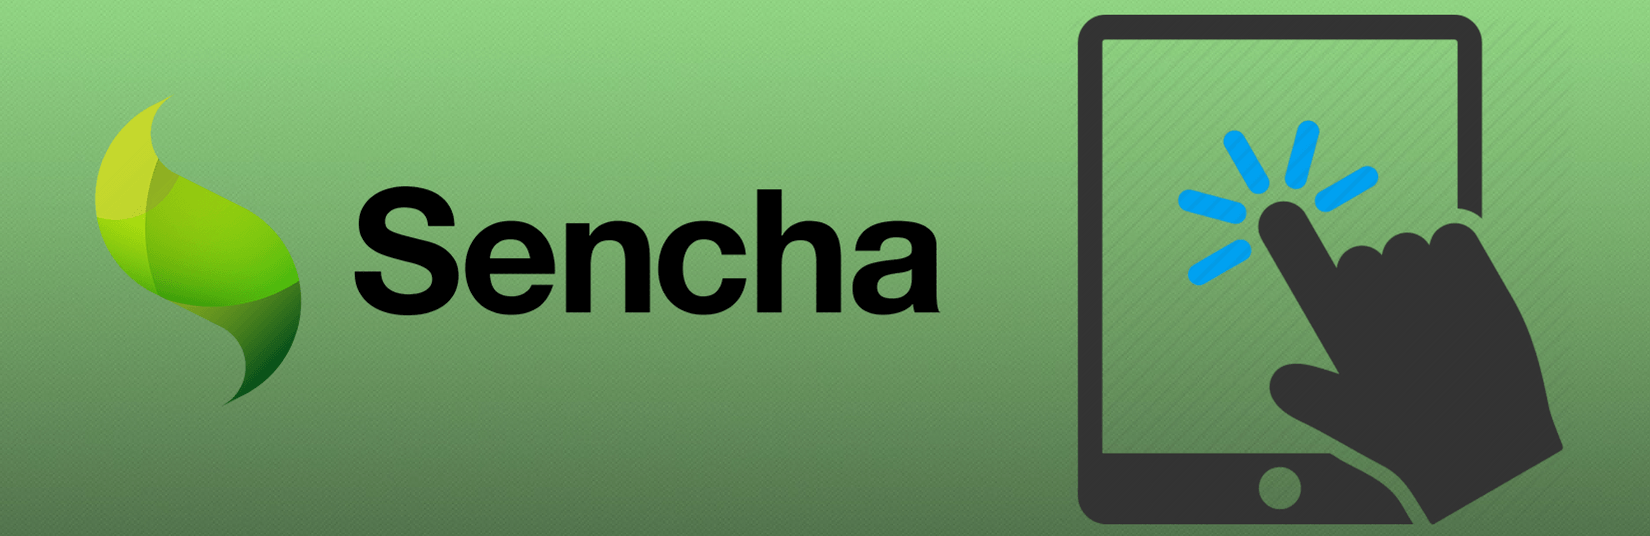 Sencha Logo - Sencha App Development | Sencha App build | Hire Sencha Developers